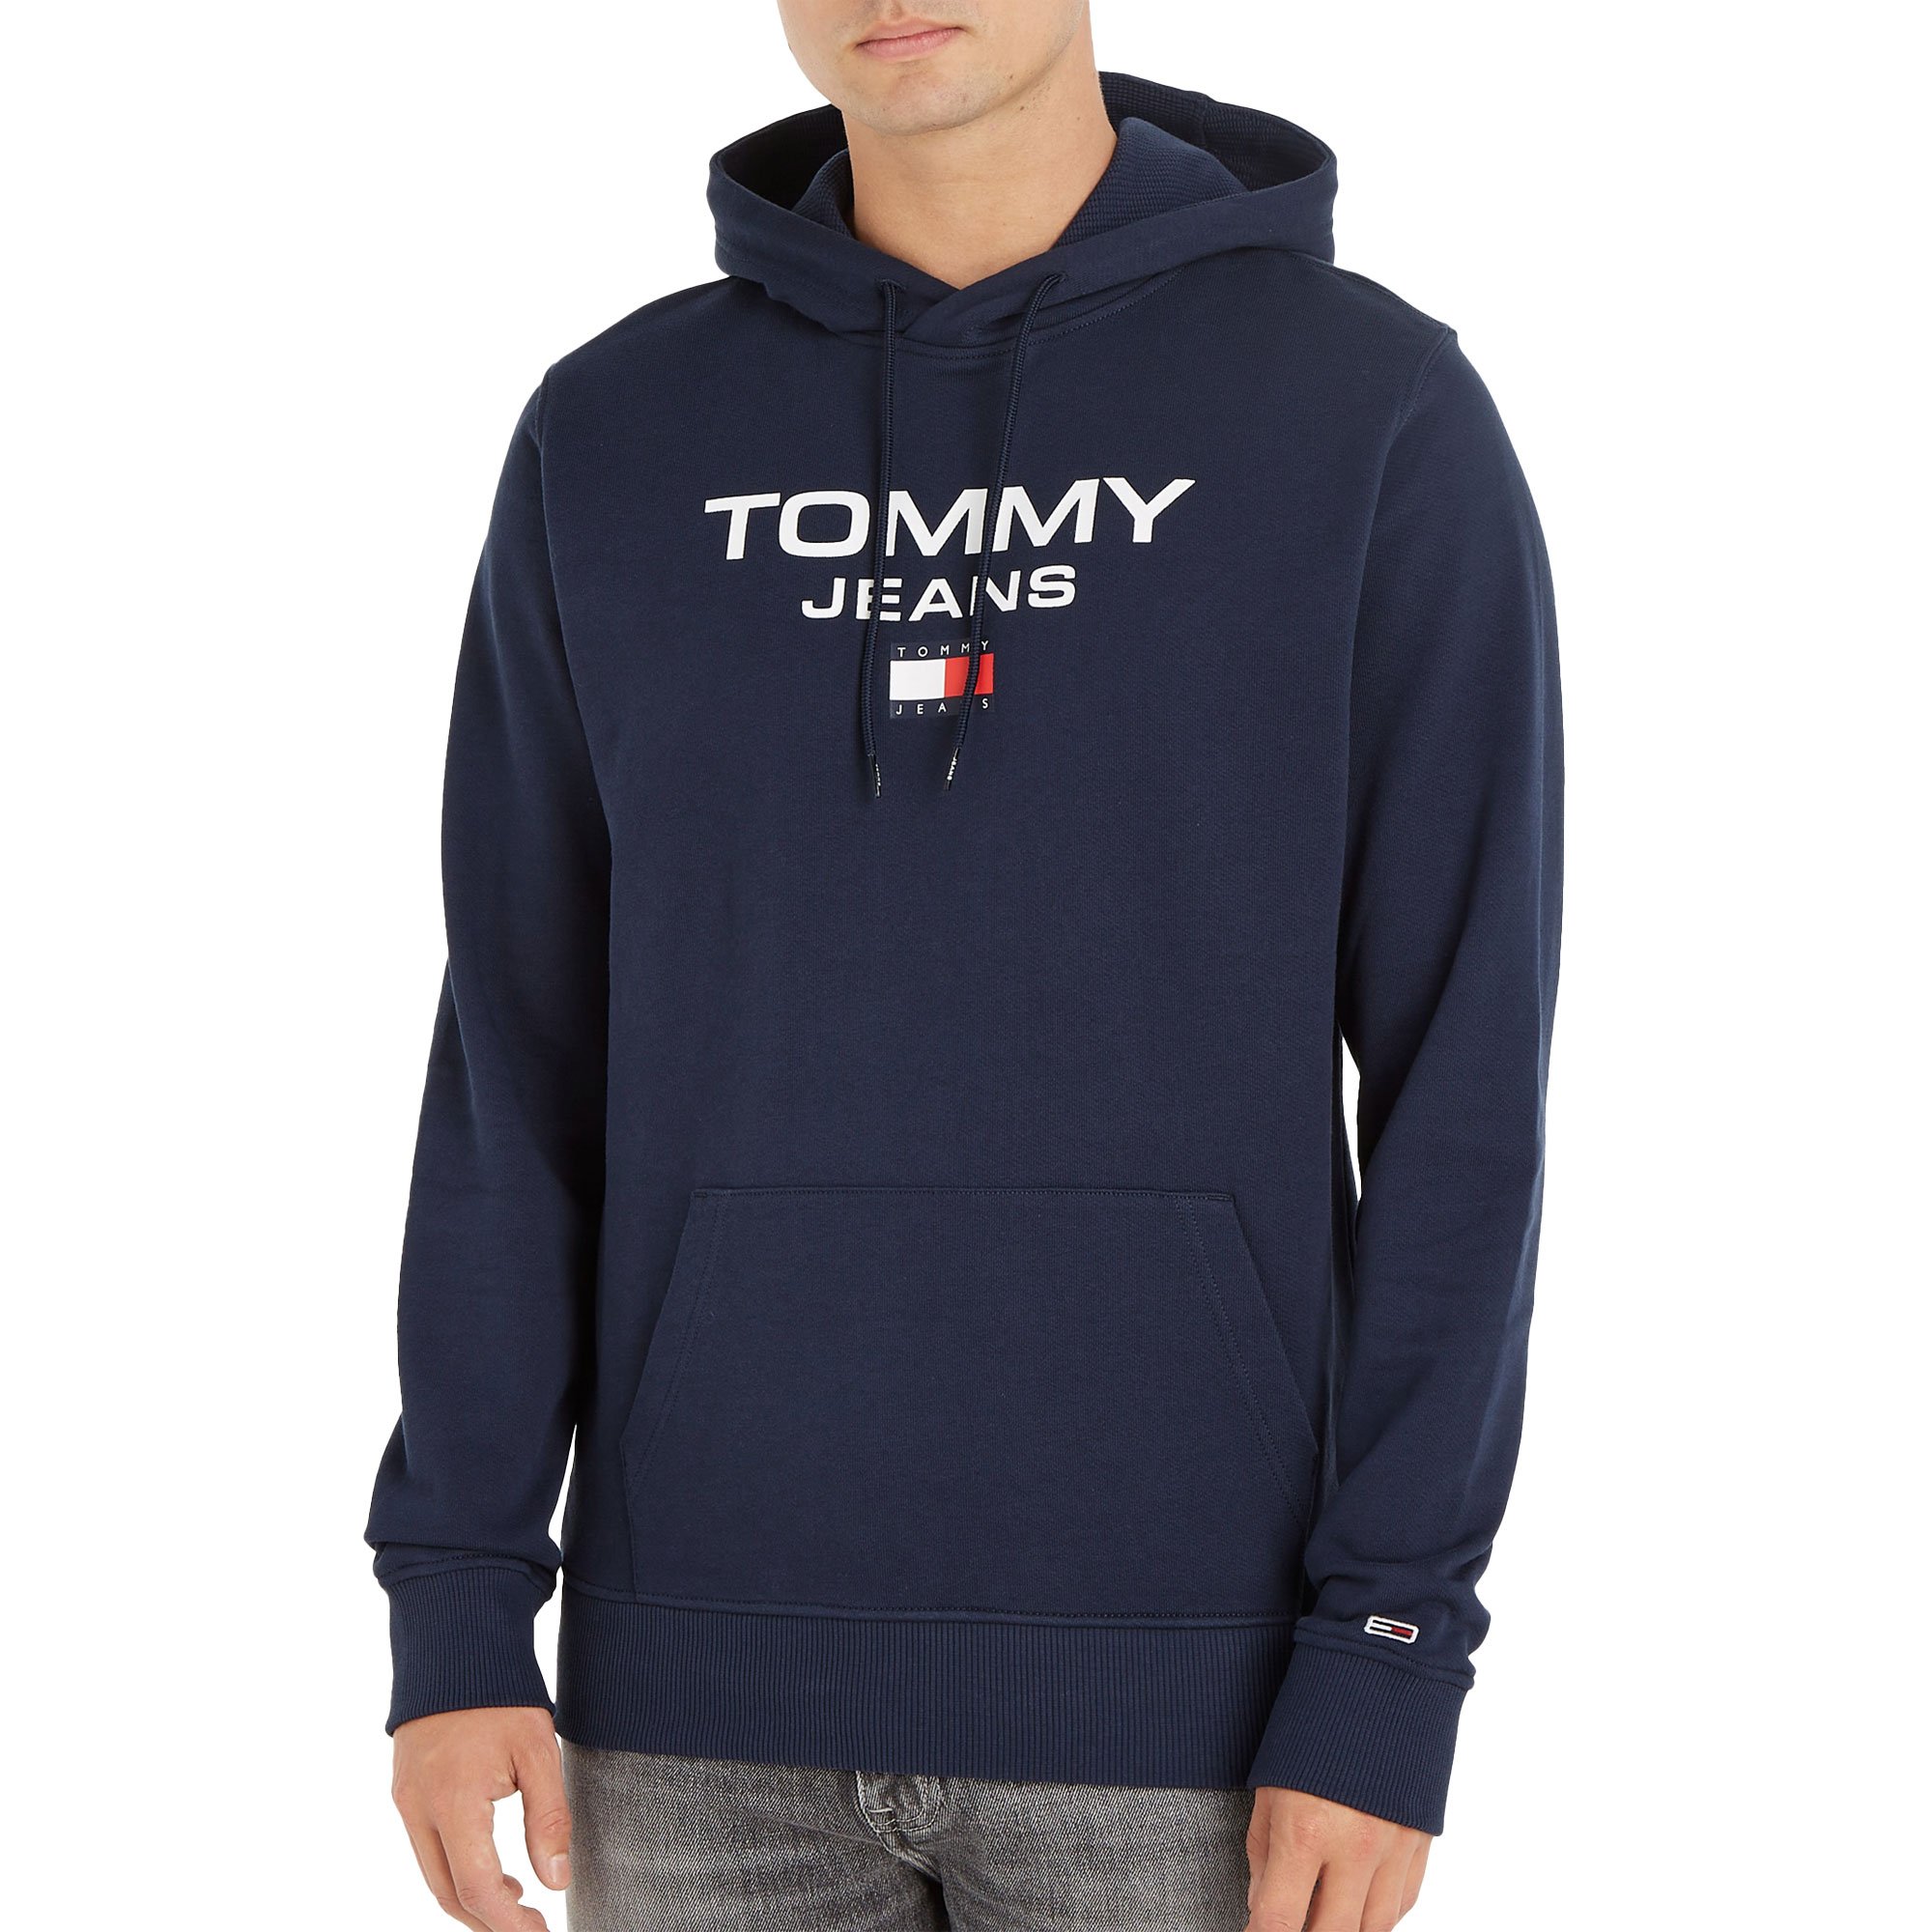 Jeans REG Kapuzensweatshirt TJM dunkelblau Herren ENTRY HOODIE XL twilight navy Tommy